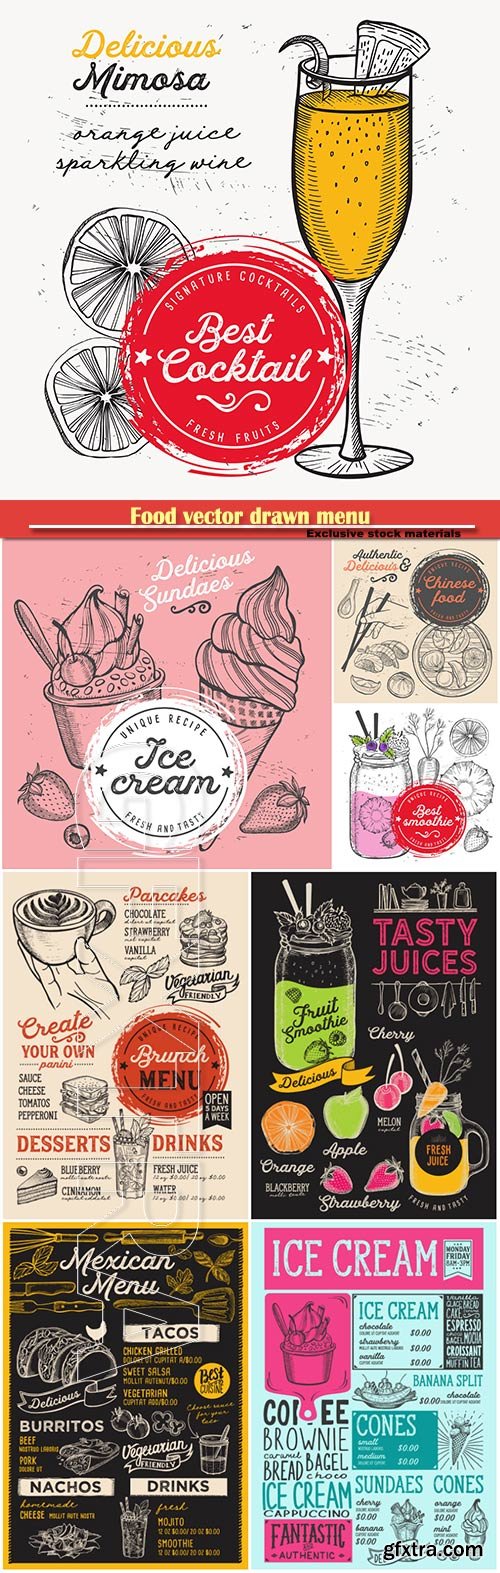 Food vector drawn menu, fast food, ice cream, desserts, mexican food